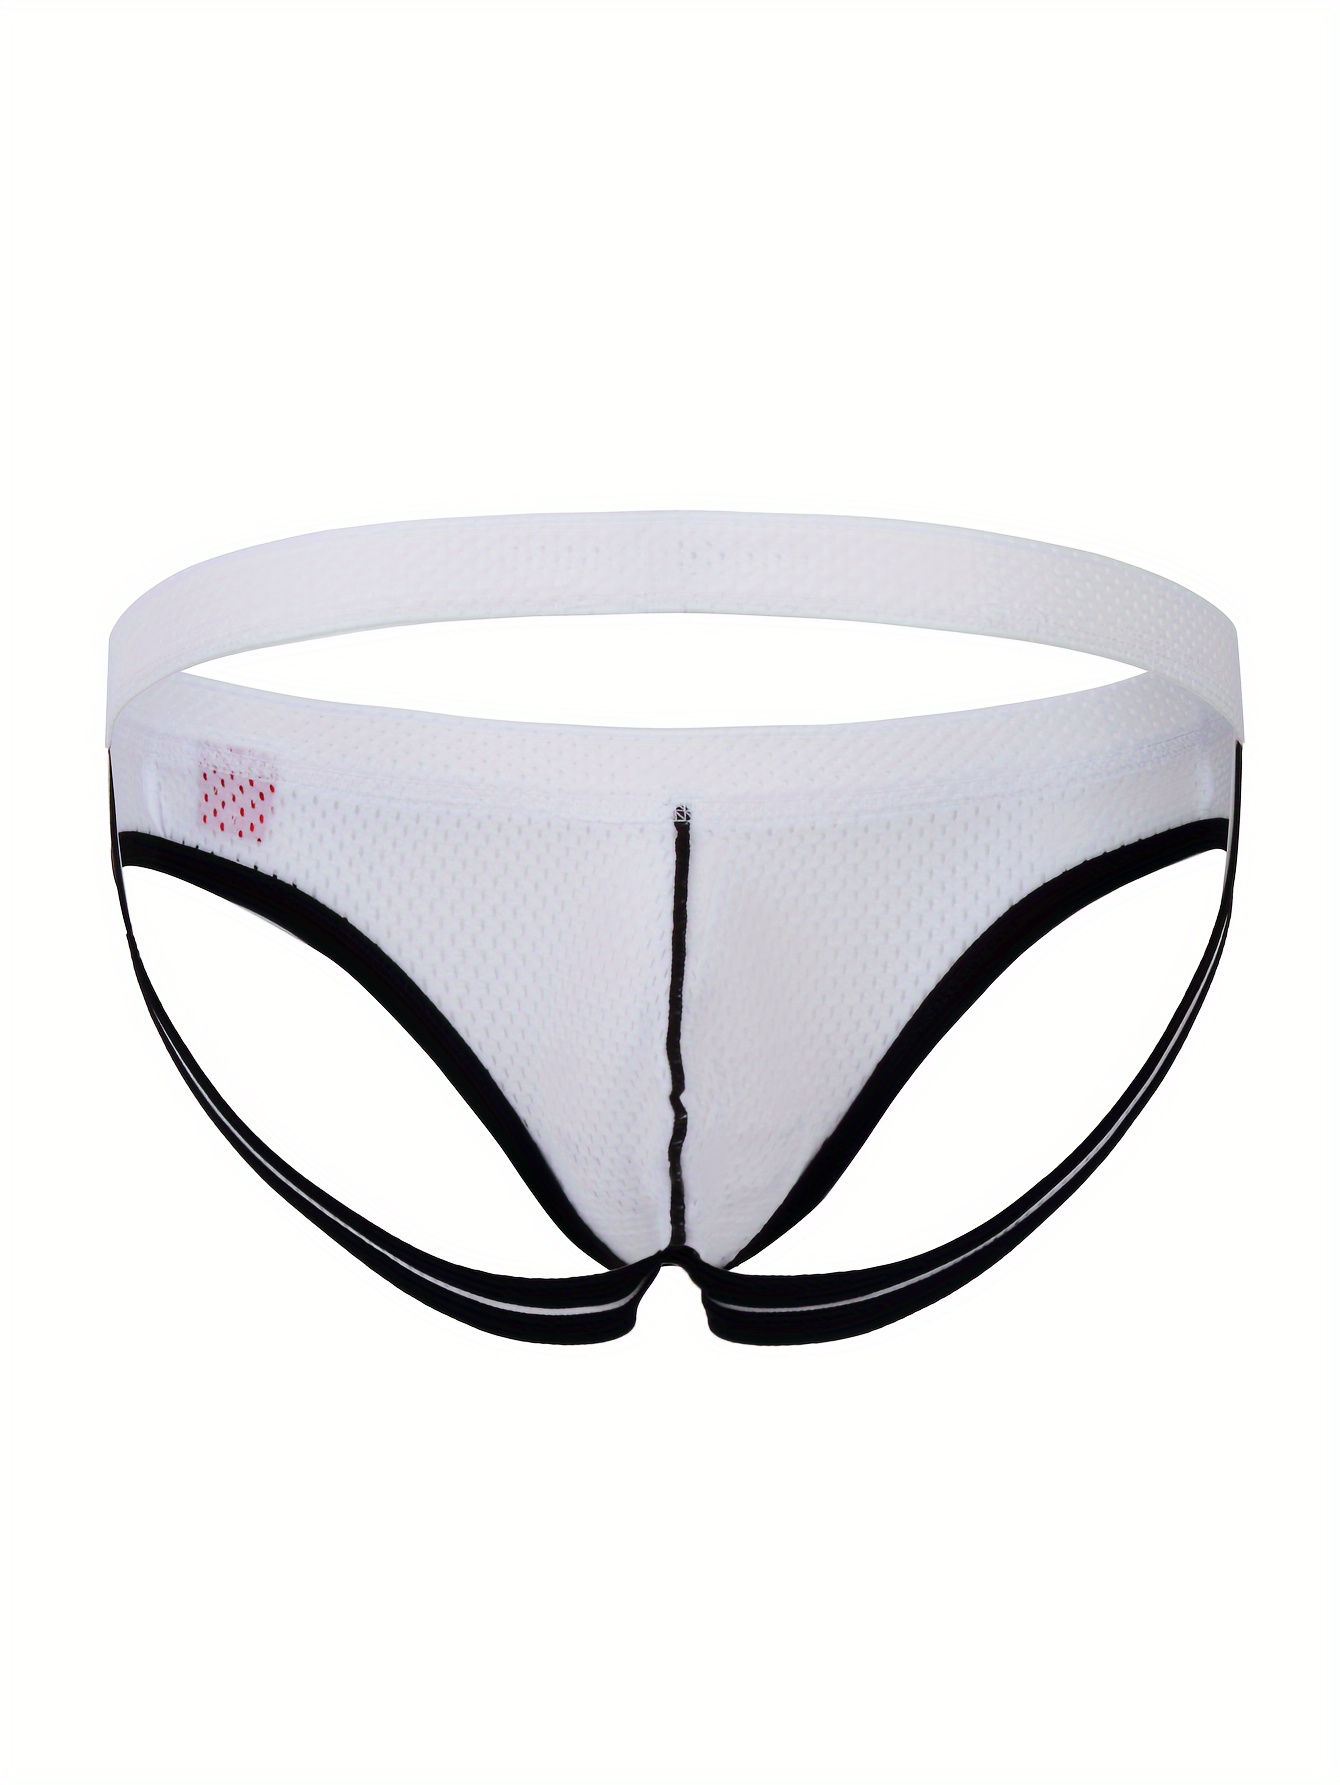 Men's Jockstrap Underwear Low Waist Mesh Breathable Athletic